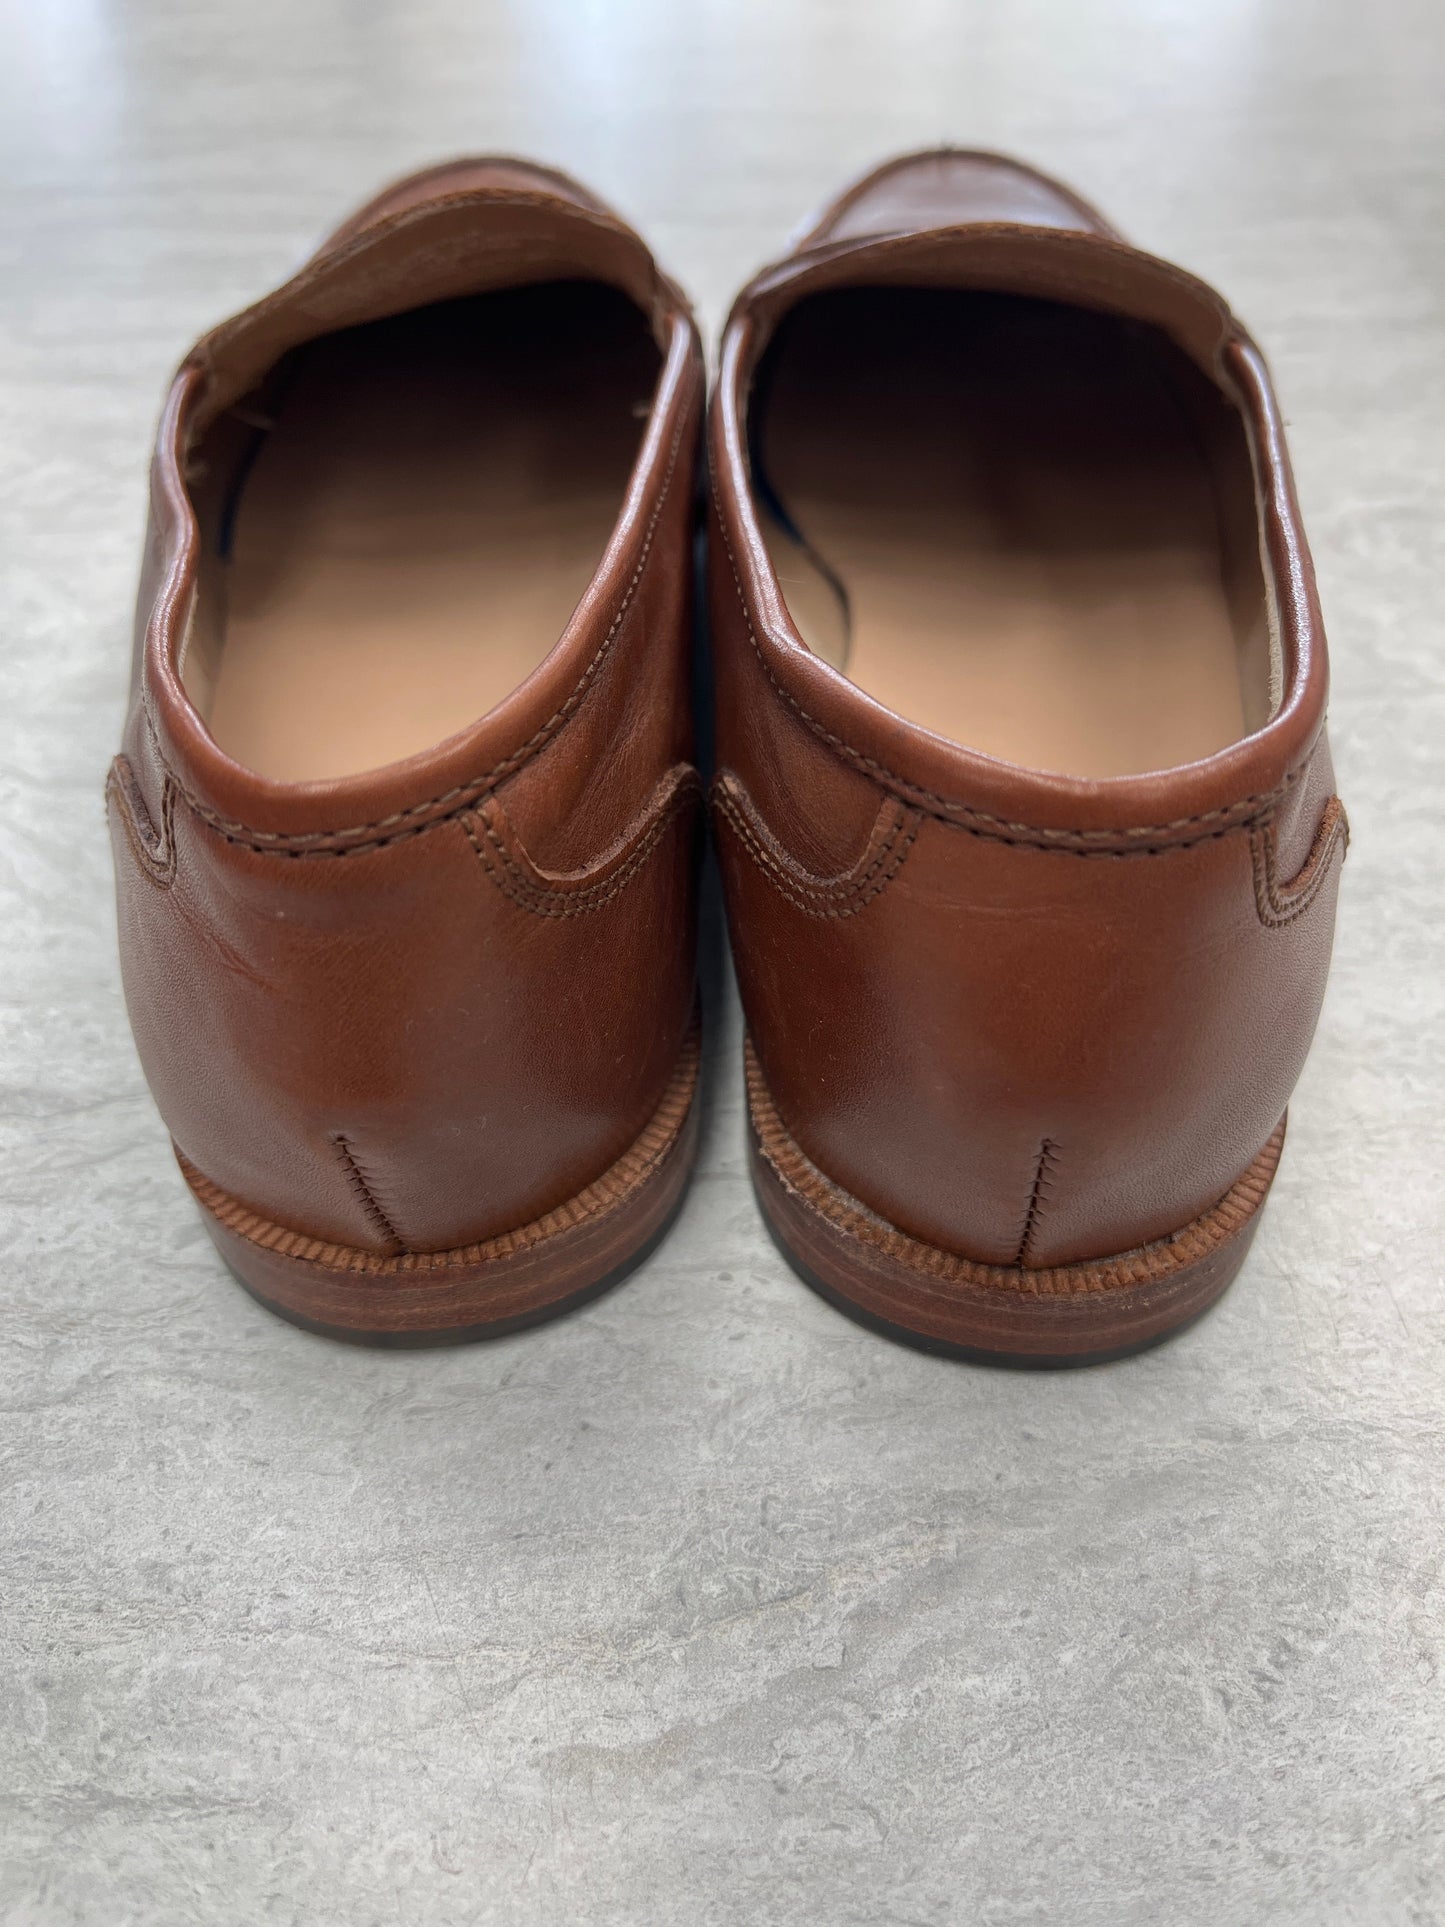 Brown Shoes Flats J. Crew, Size 7.5